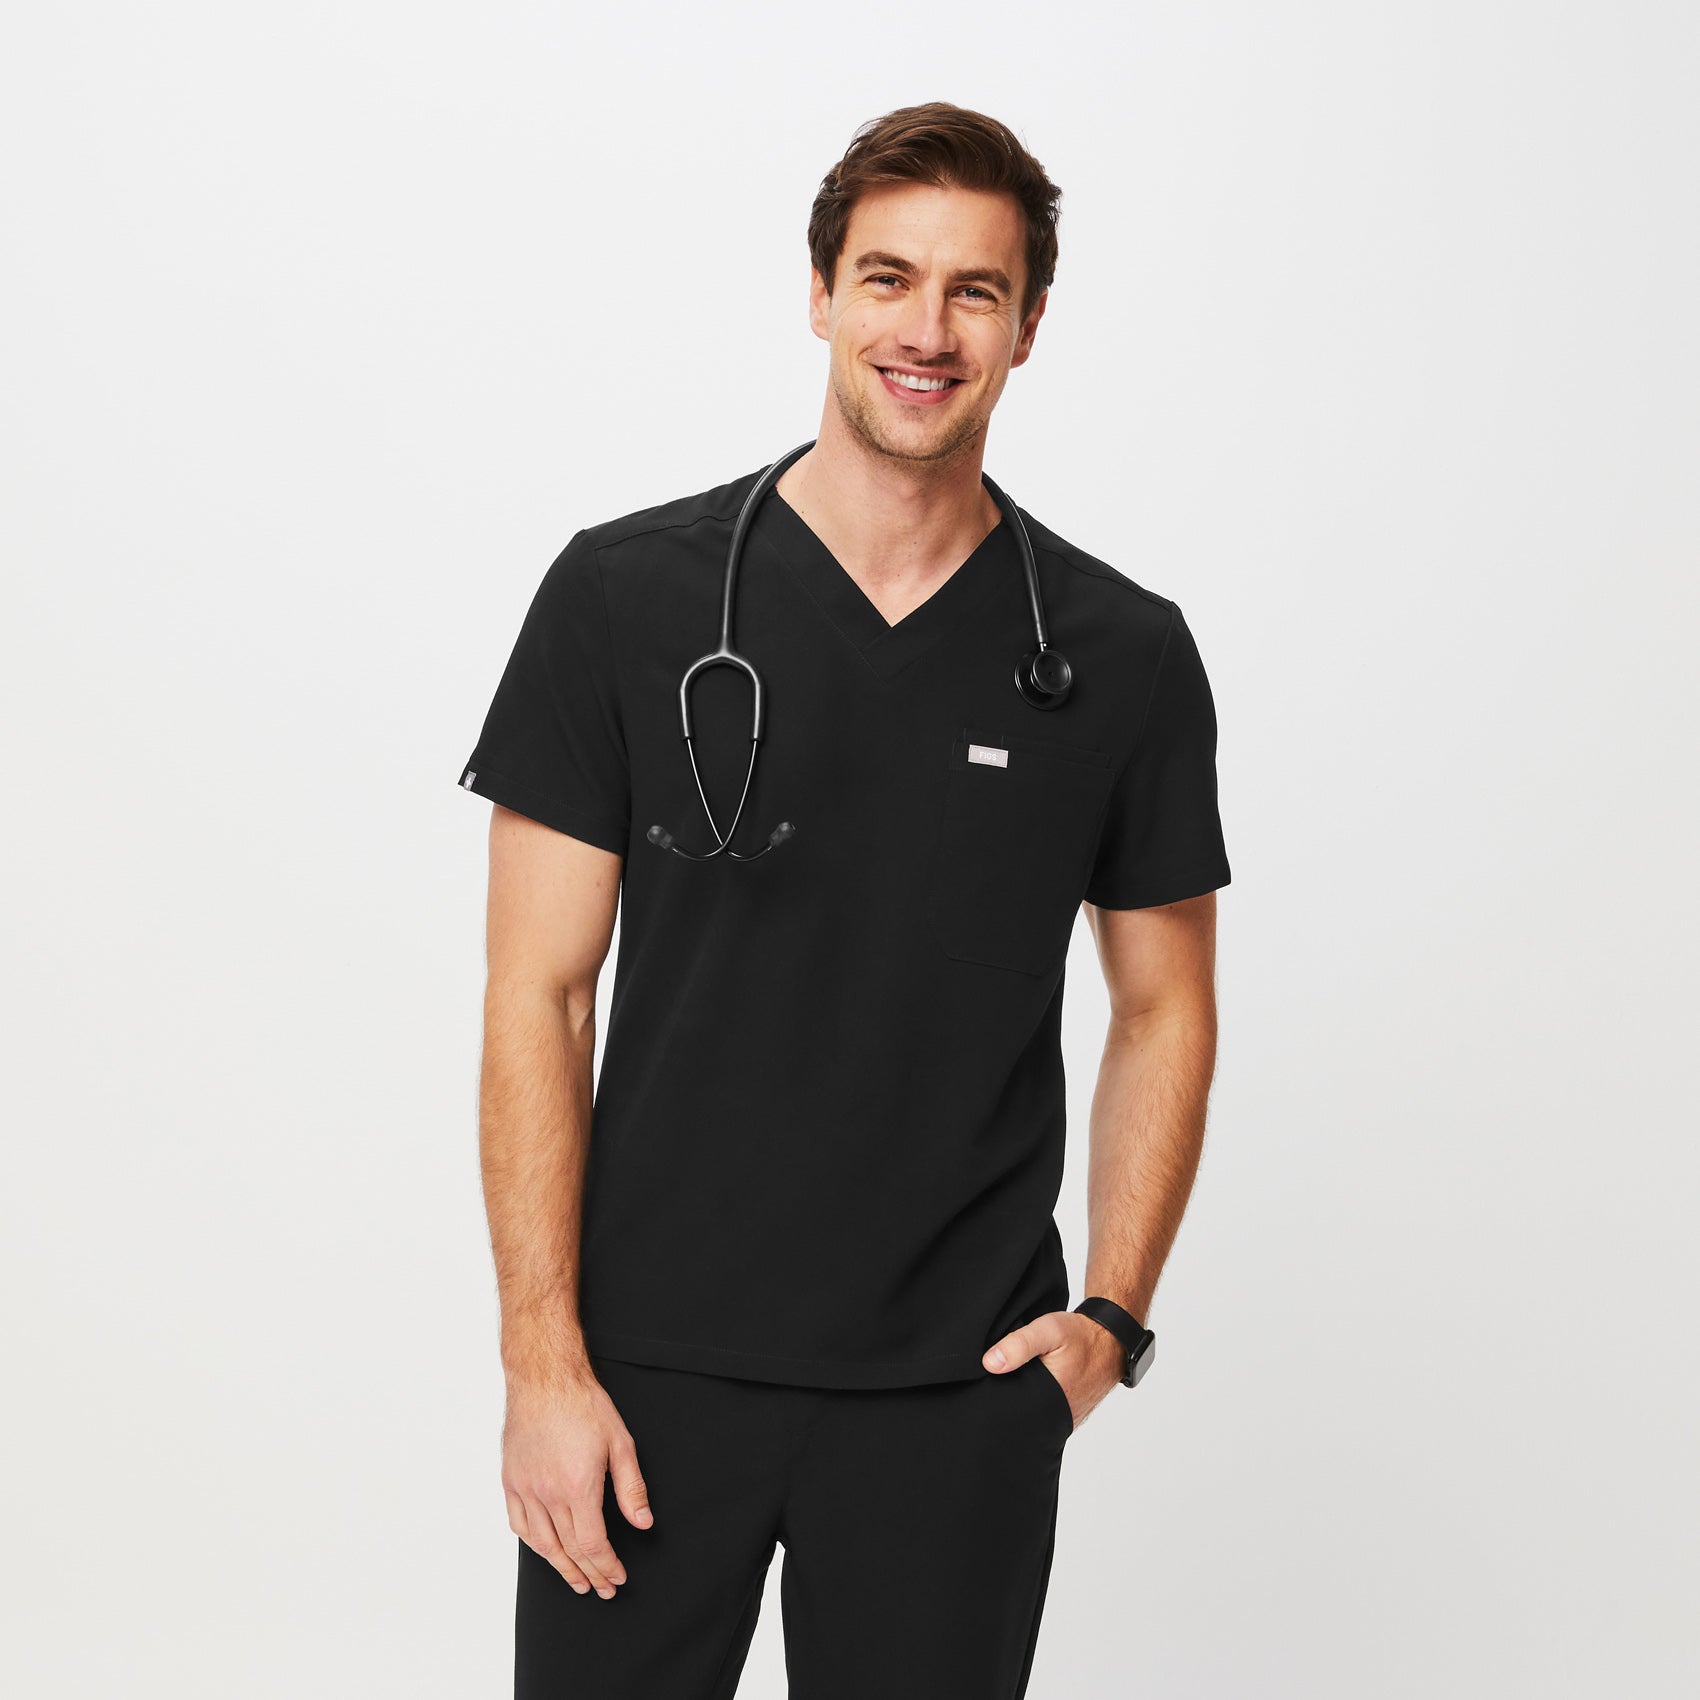 Men's Scrubs Premium Medical Uniforms Apparel · FIGS, 55% OFF